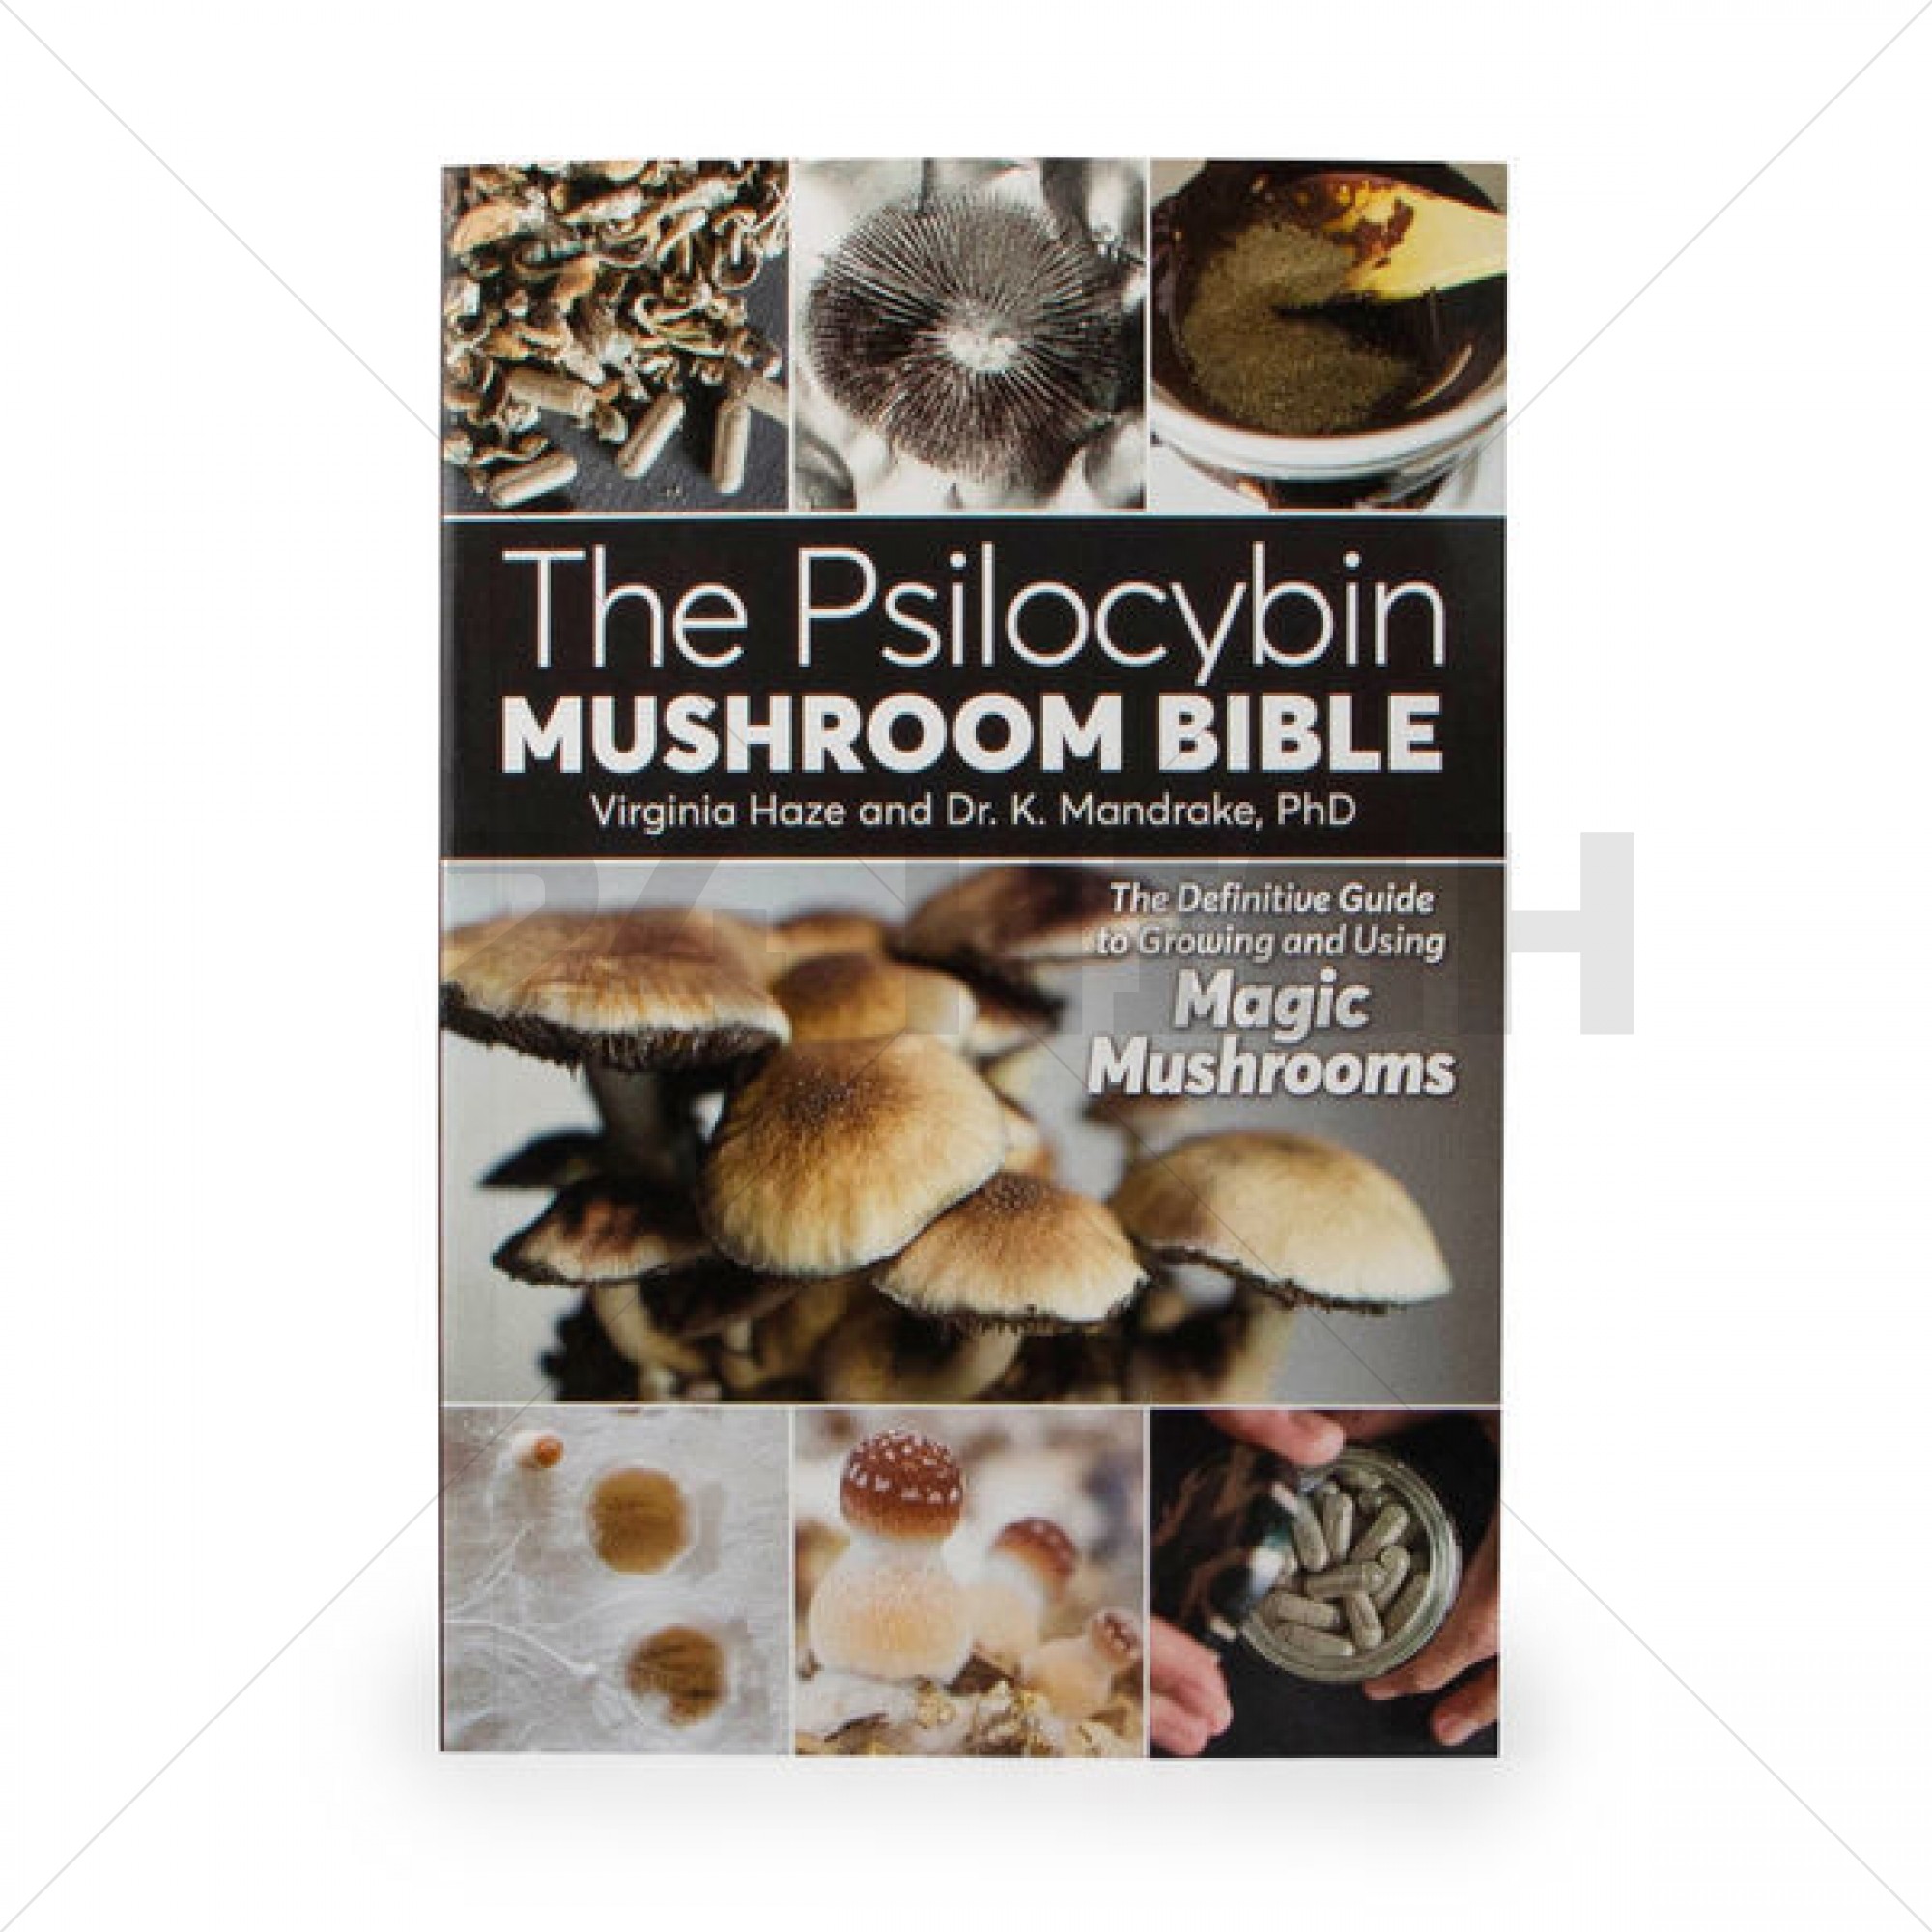 The Psilocybin Mushroom Bible (La Bible des champignons à psilocybine)